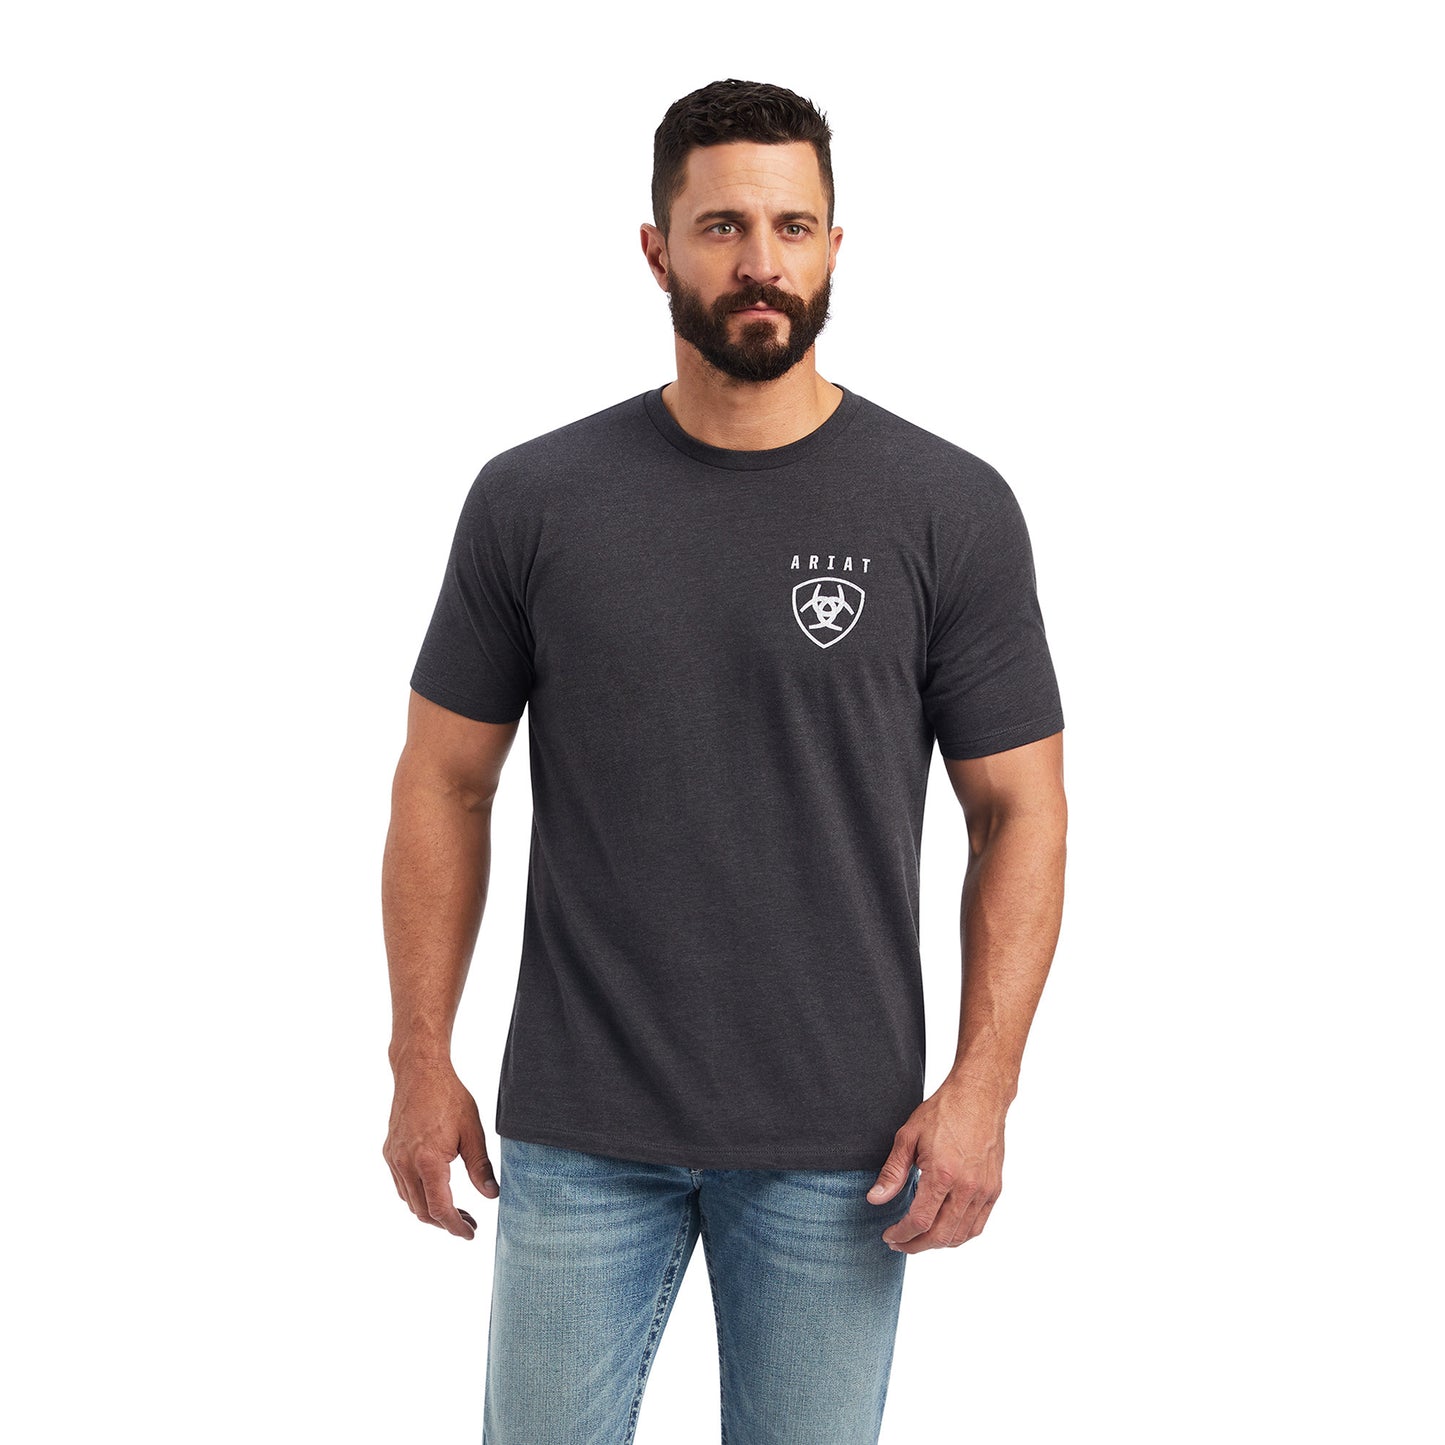 Ariat® Men's Vertical Freedom Charcoal Short Sleeve Tee Shirt 10038472